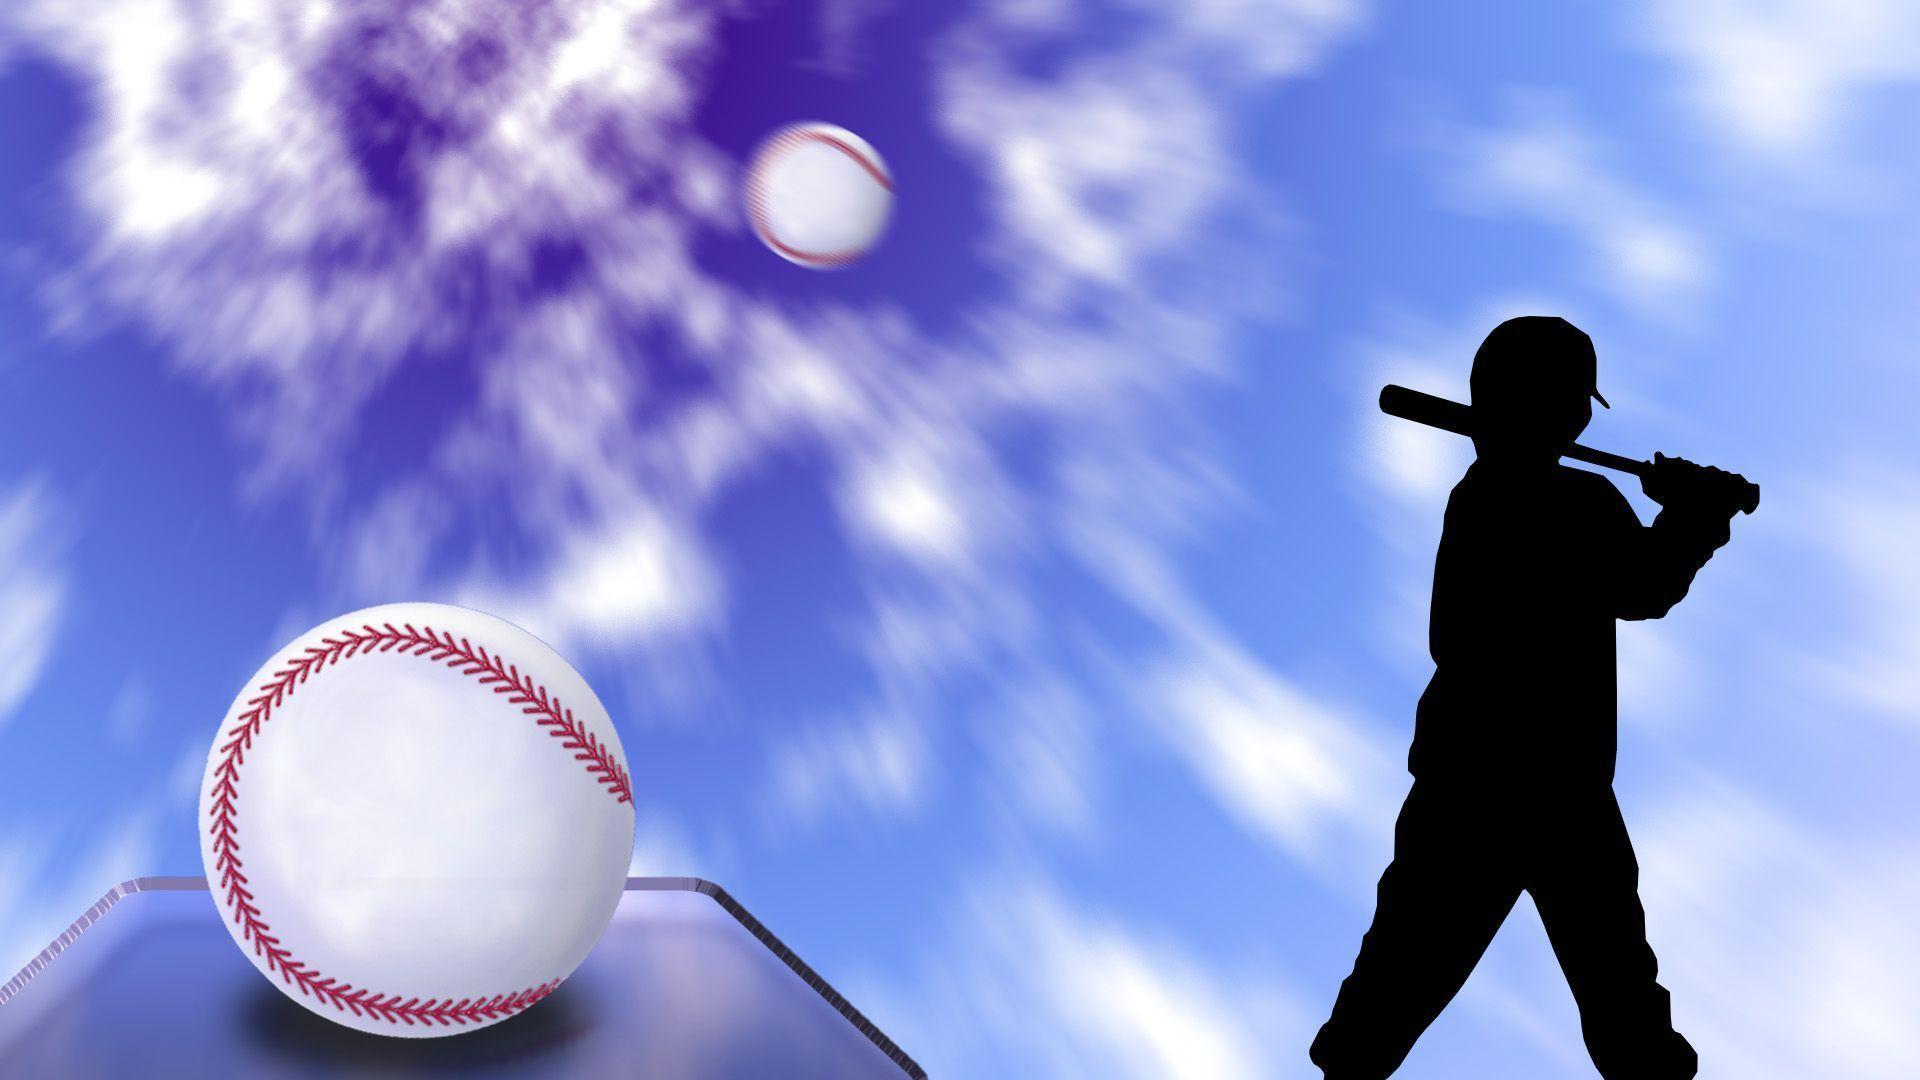 Baseball Background Image Fantasy Sports Reviews, Daily